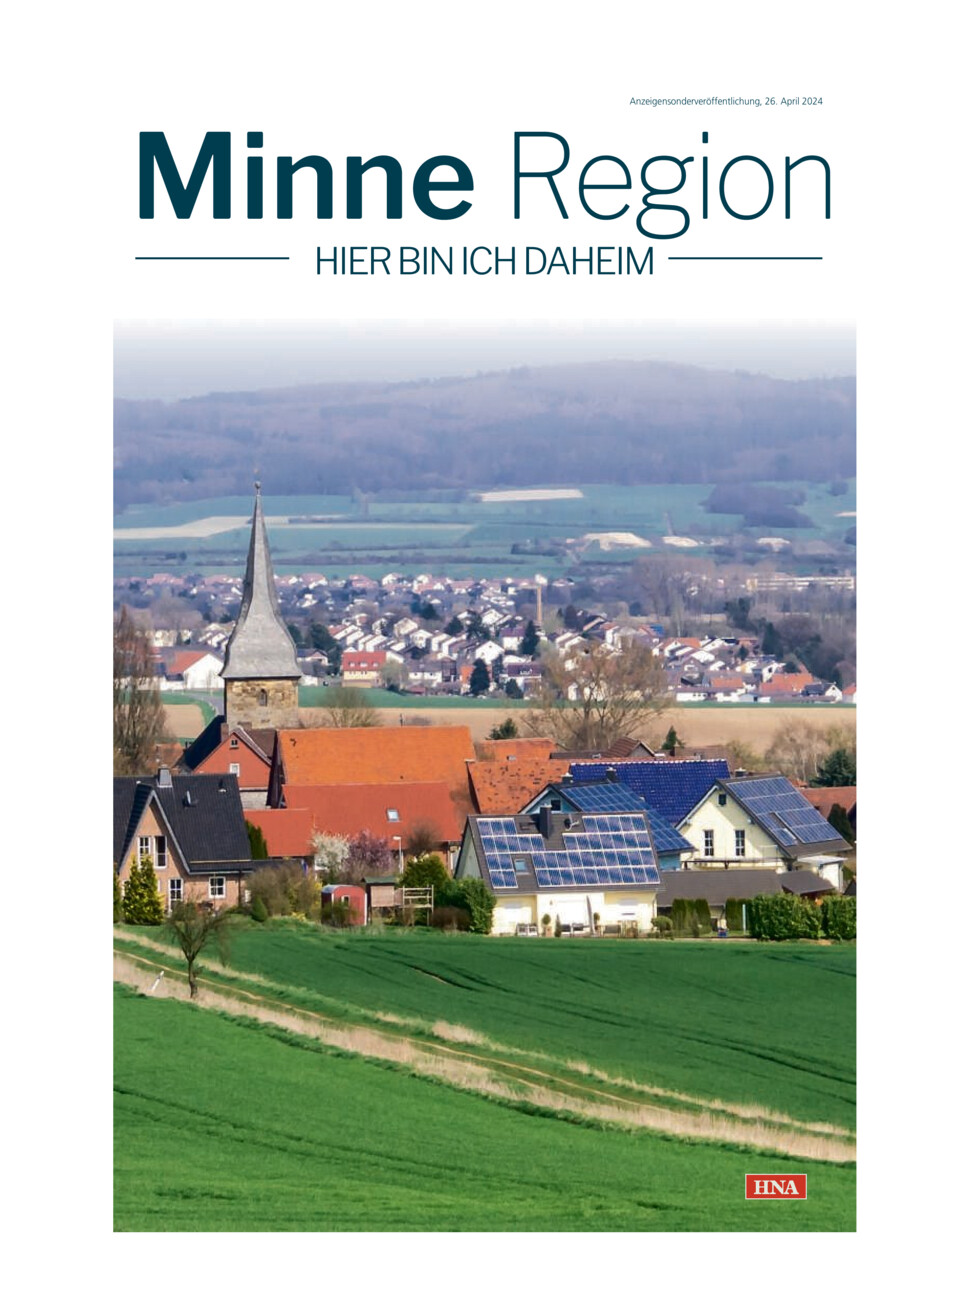 Minne Region vom Freitag, 26.04.2024